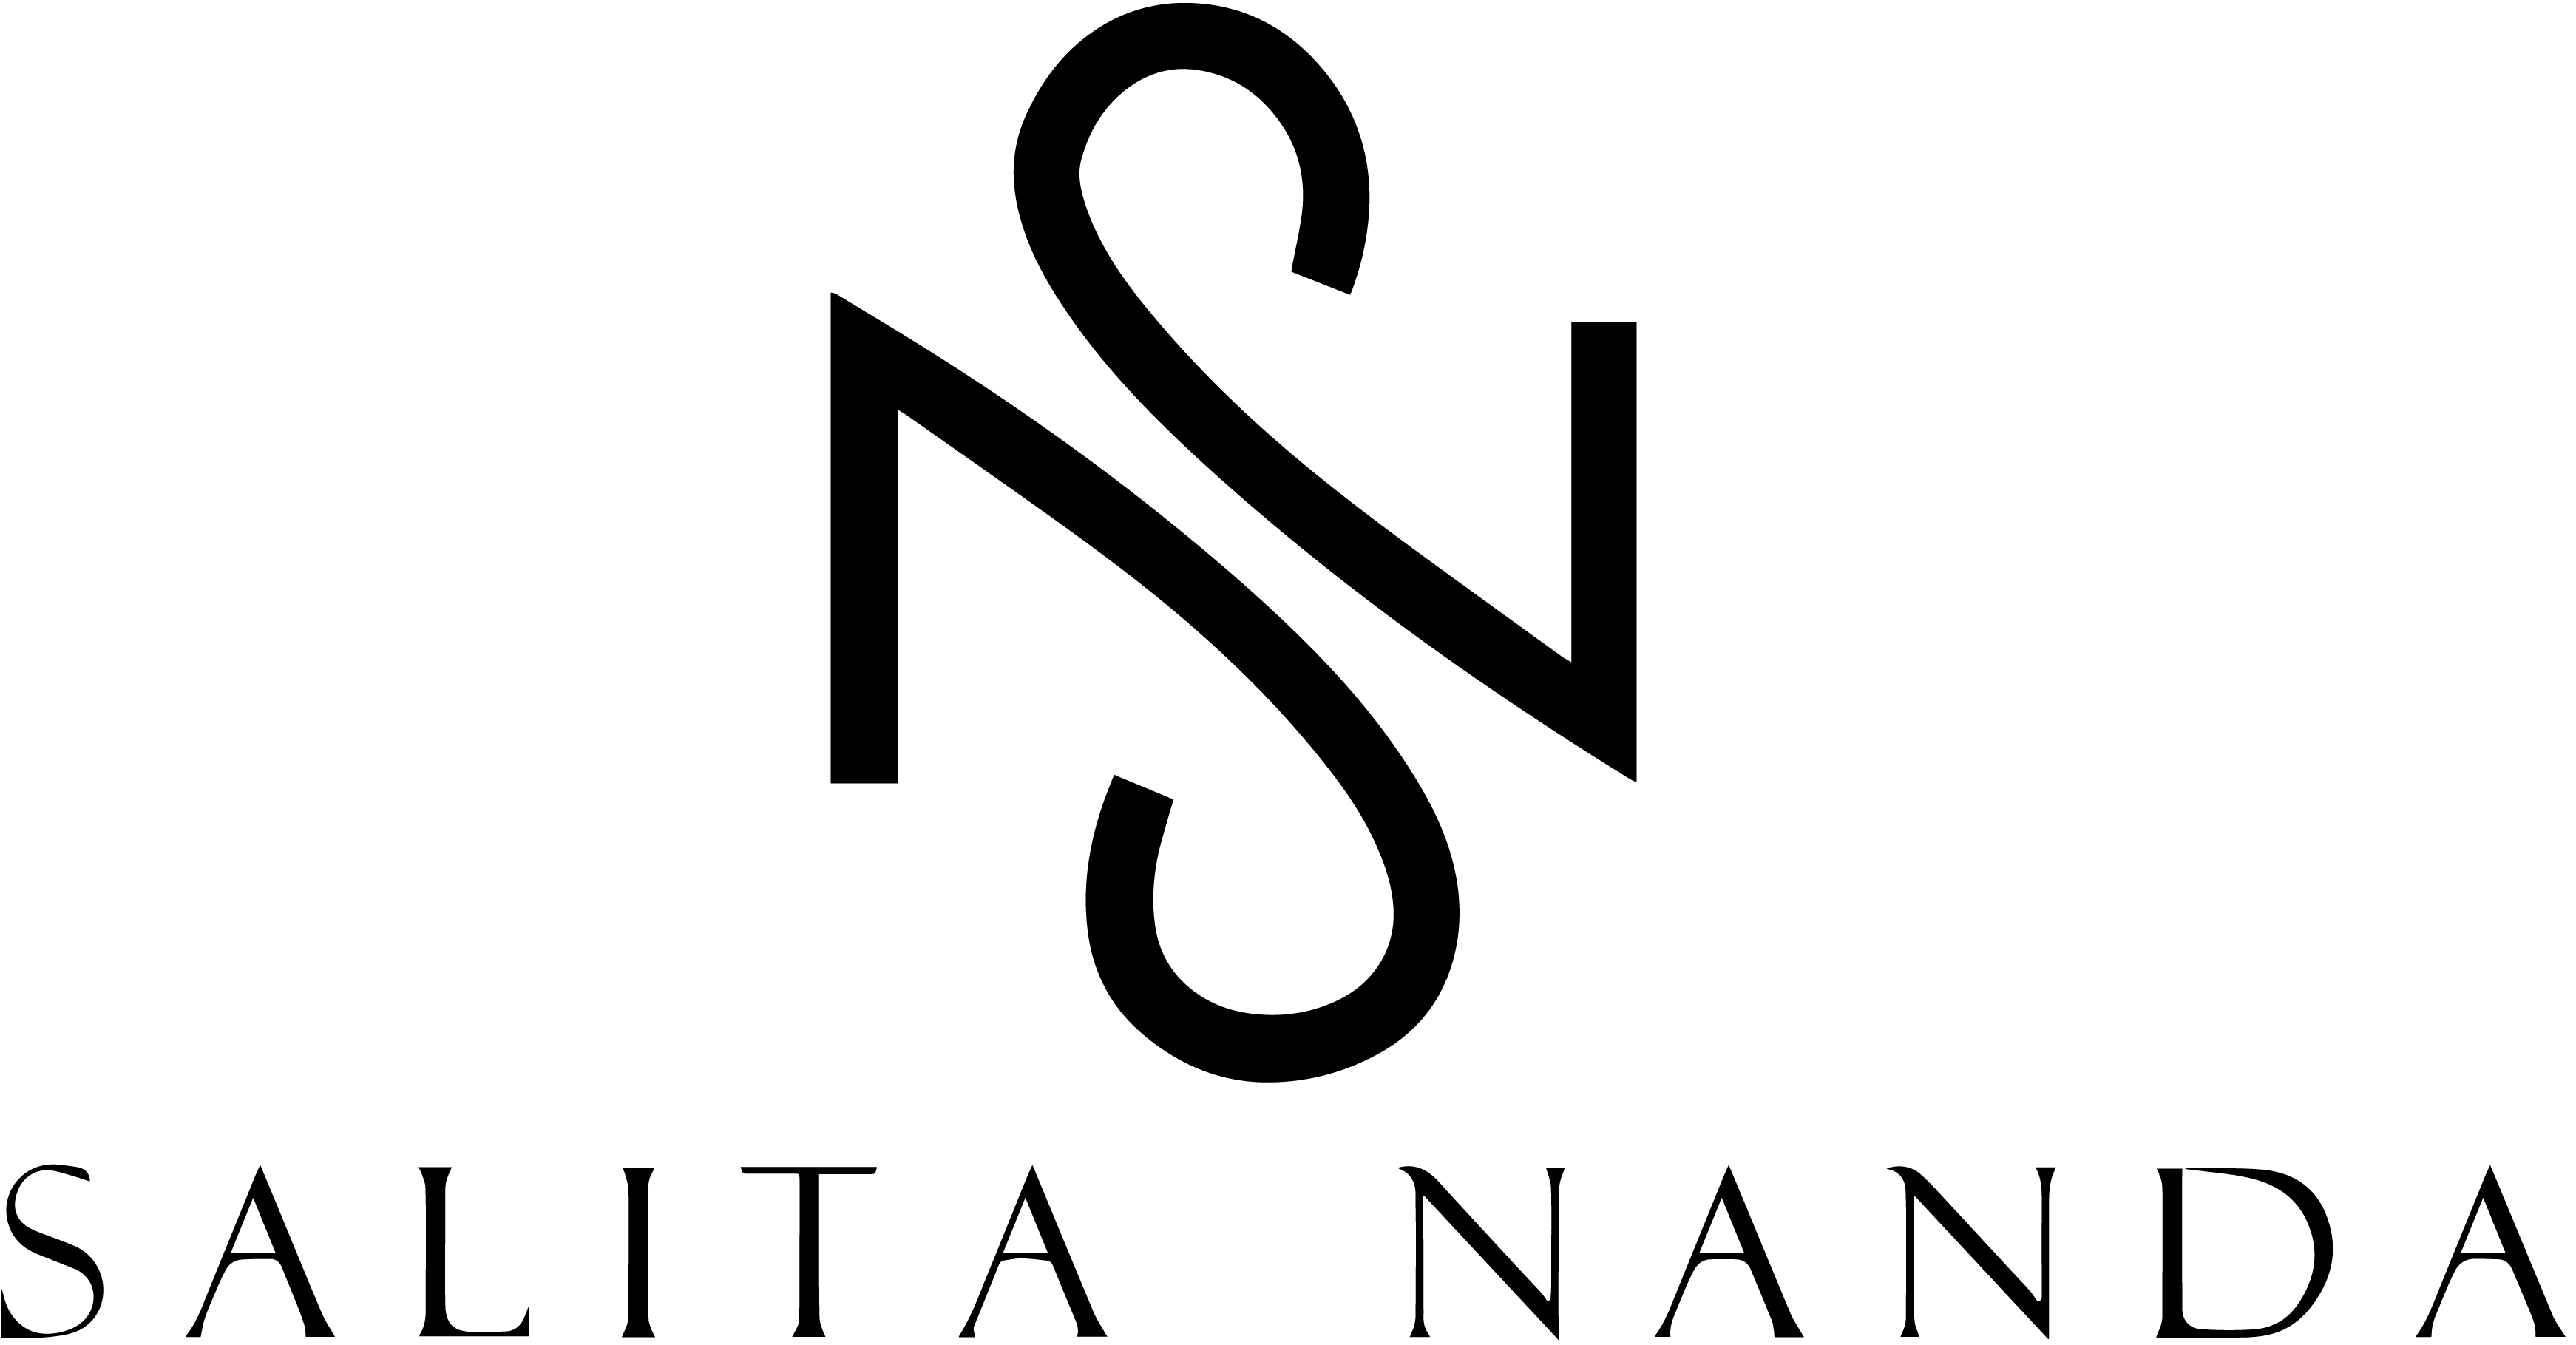 About the Designer – Salita Nanda